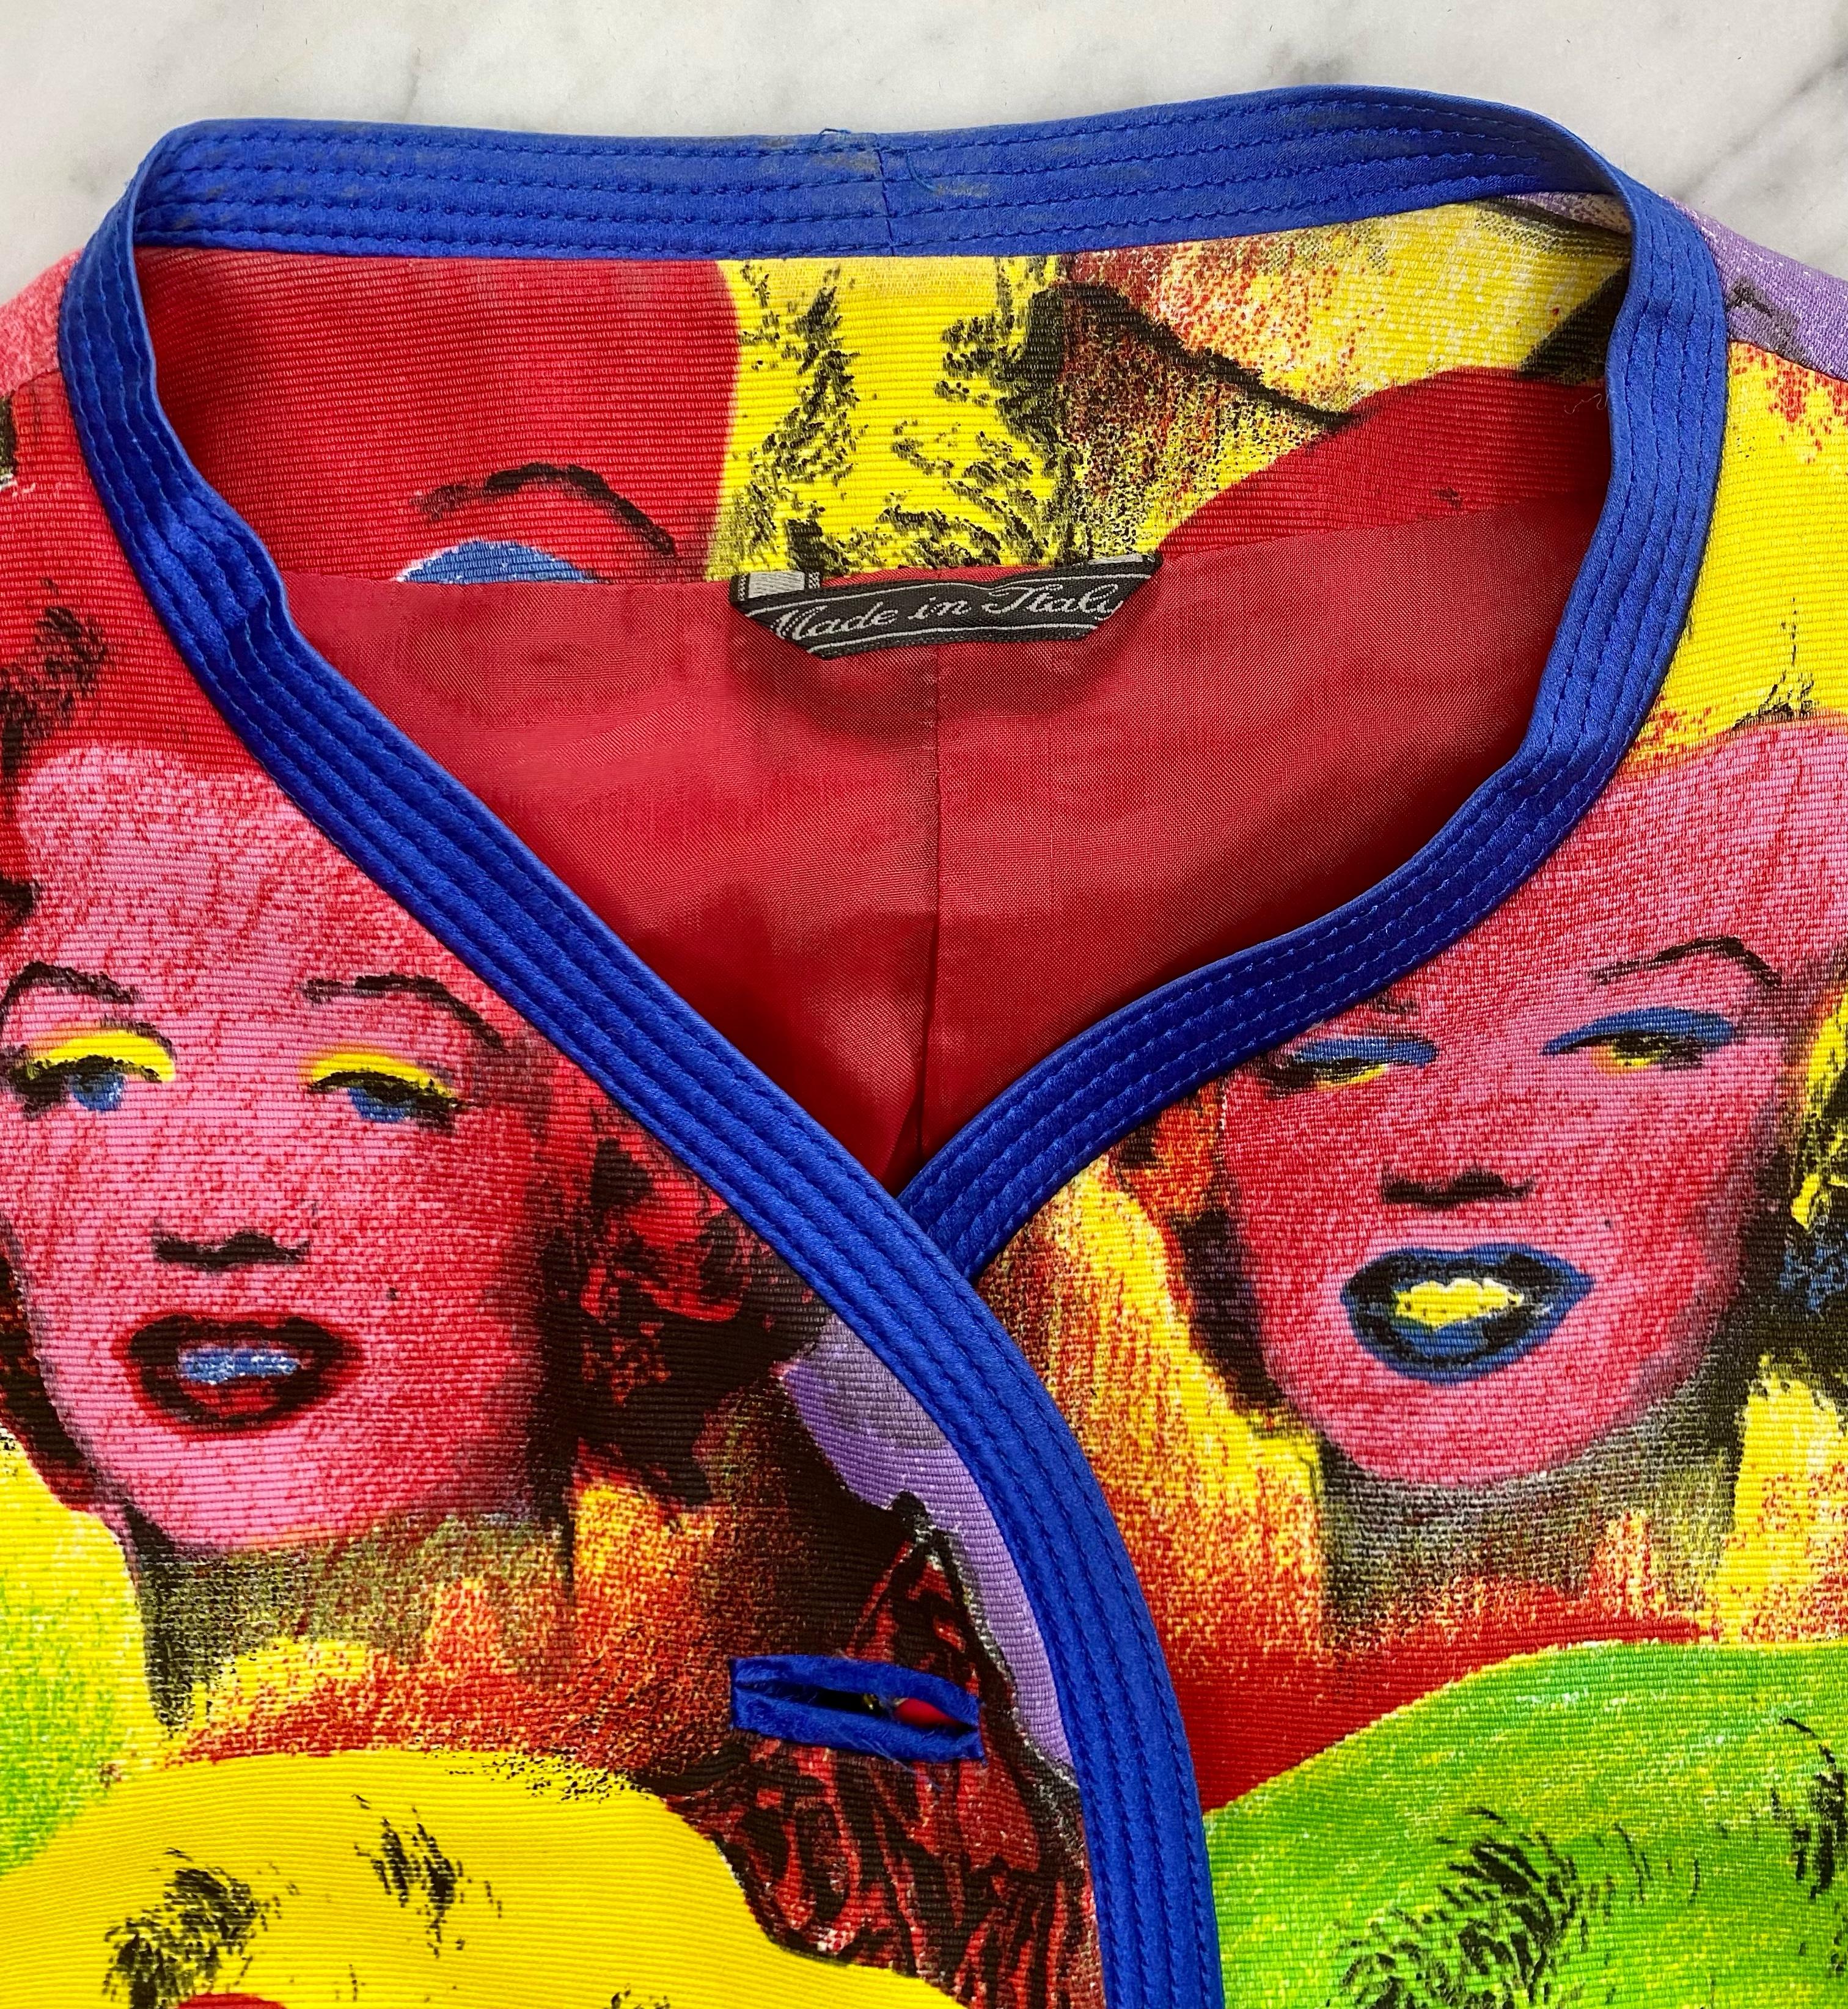 S/S 1991 Gianni Versace Marilyn Monroe Warhol Inspired Print Pop Art Skirt Suit For Sale 4